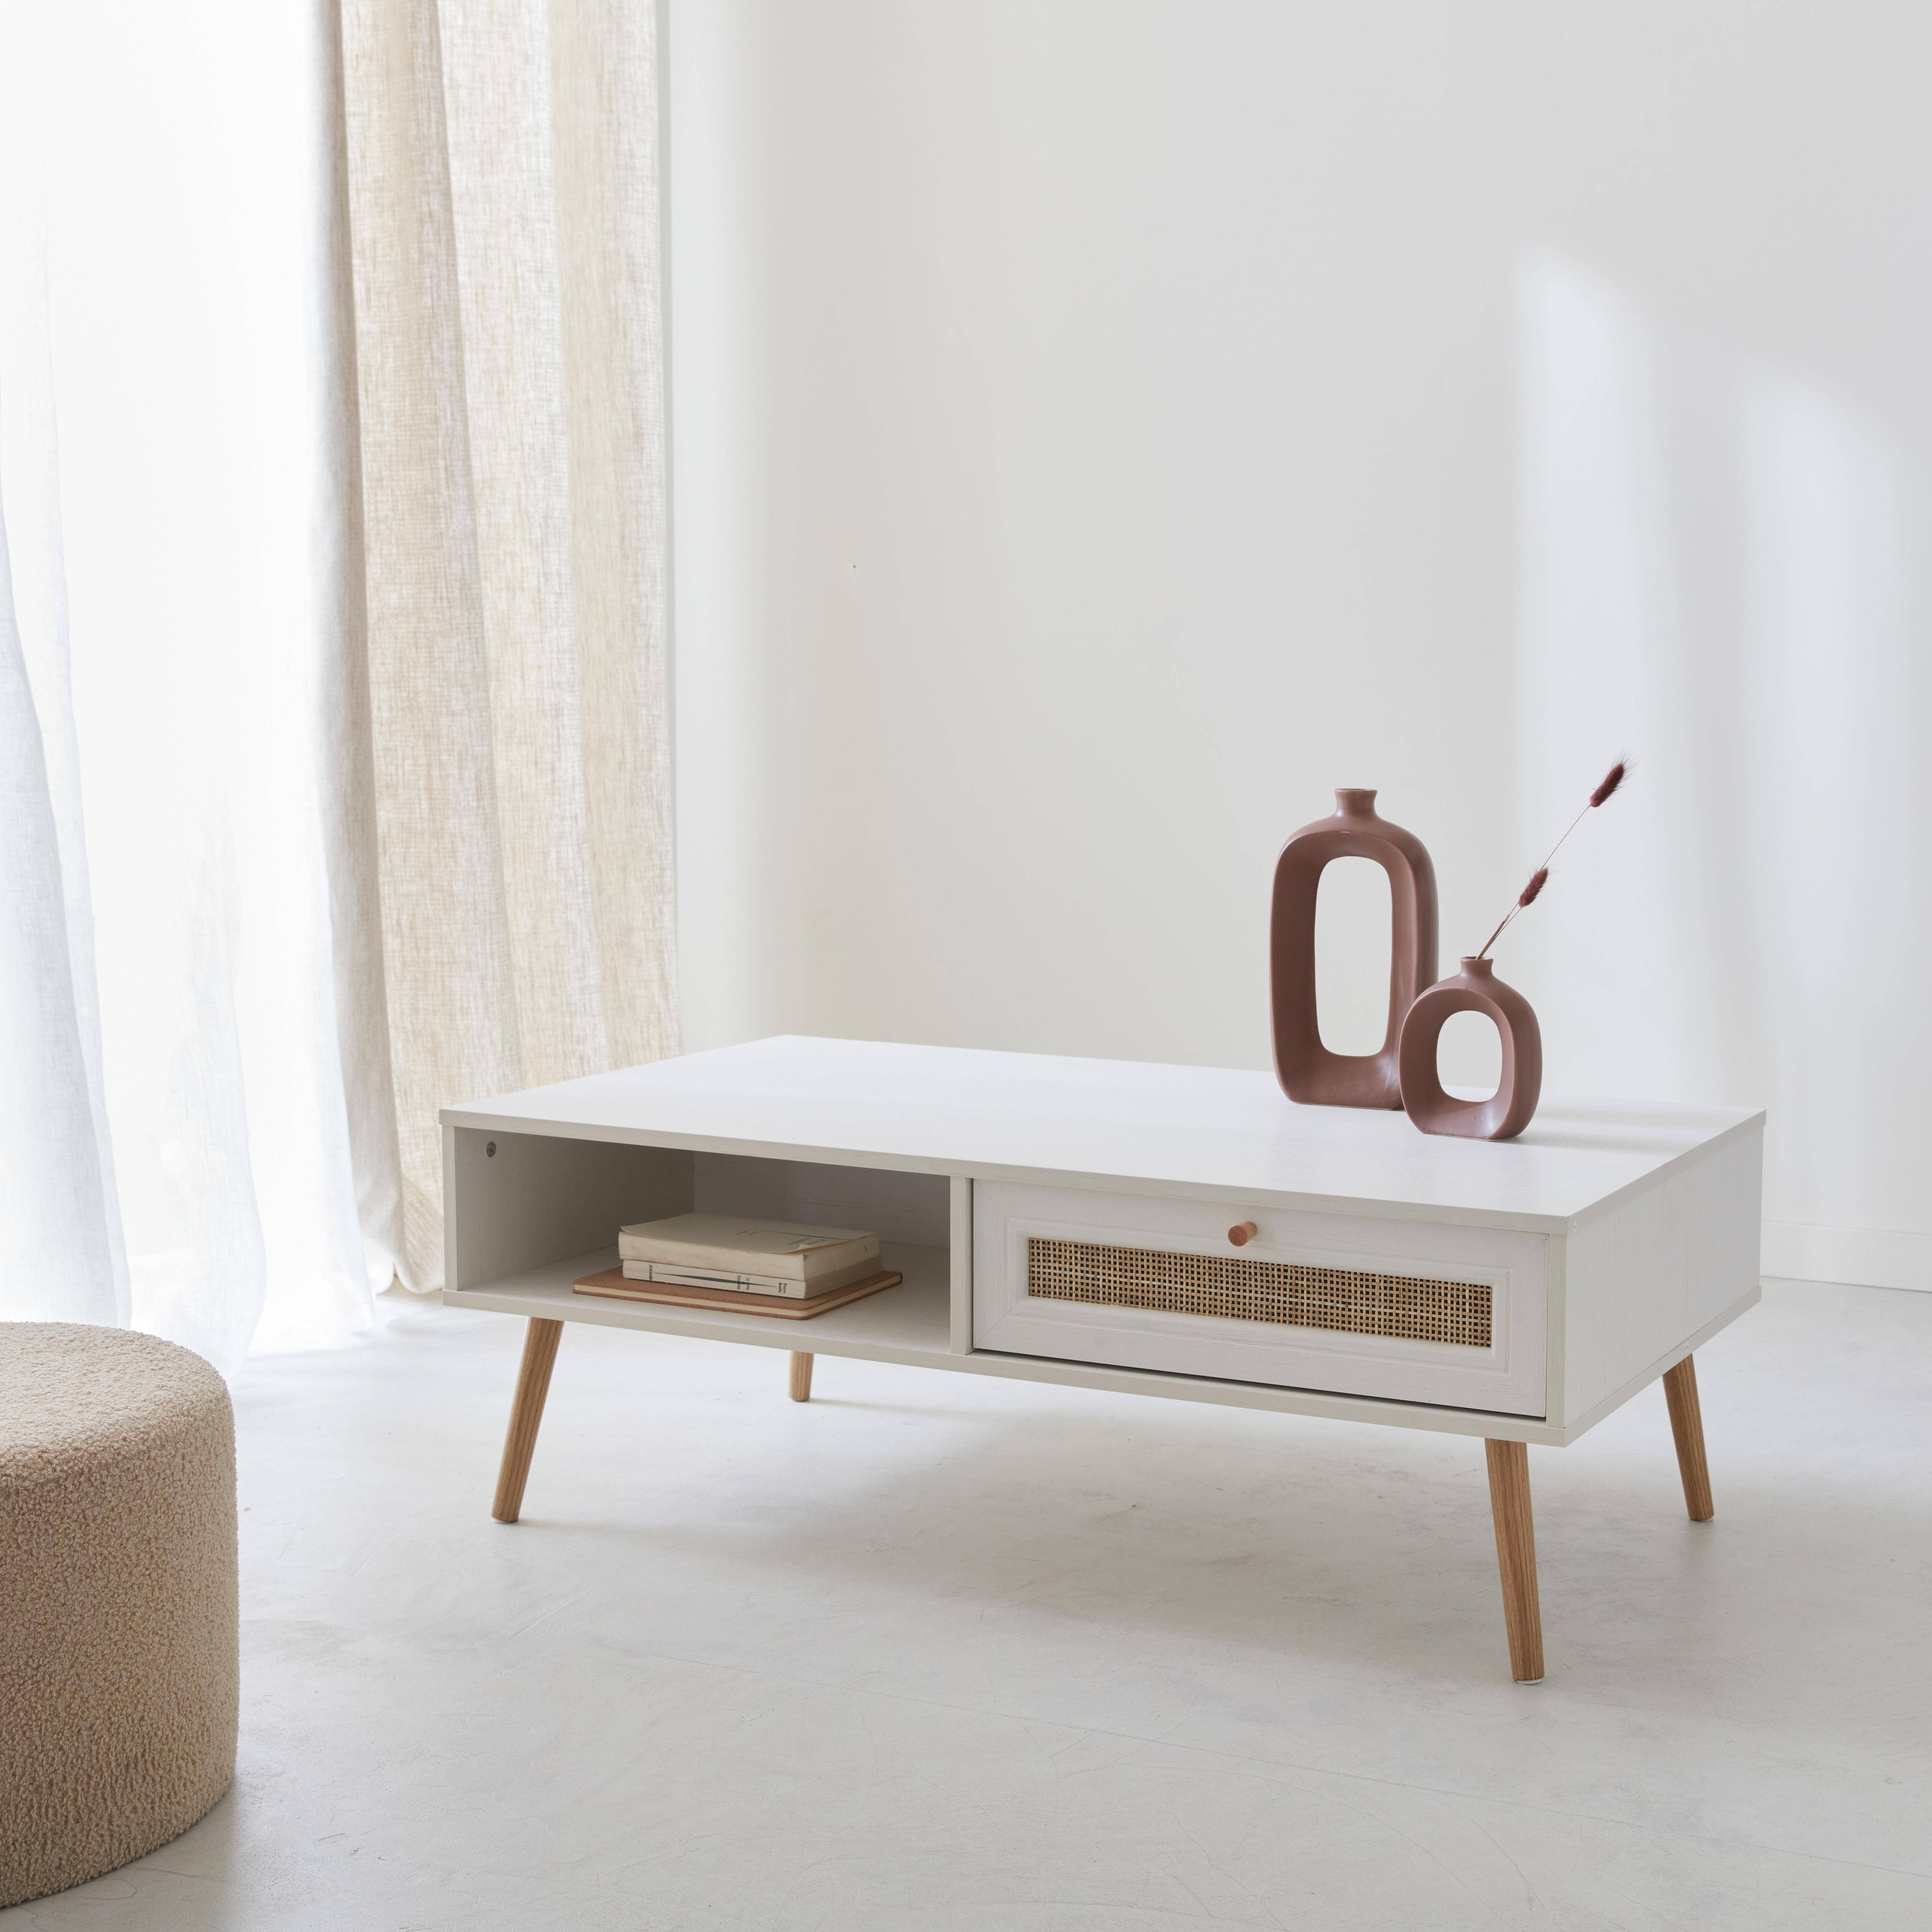  Wood and woven rattan coffee table with storage, 110x59x39cm, white, Boheme Photo2